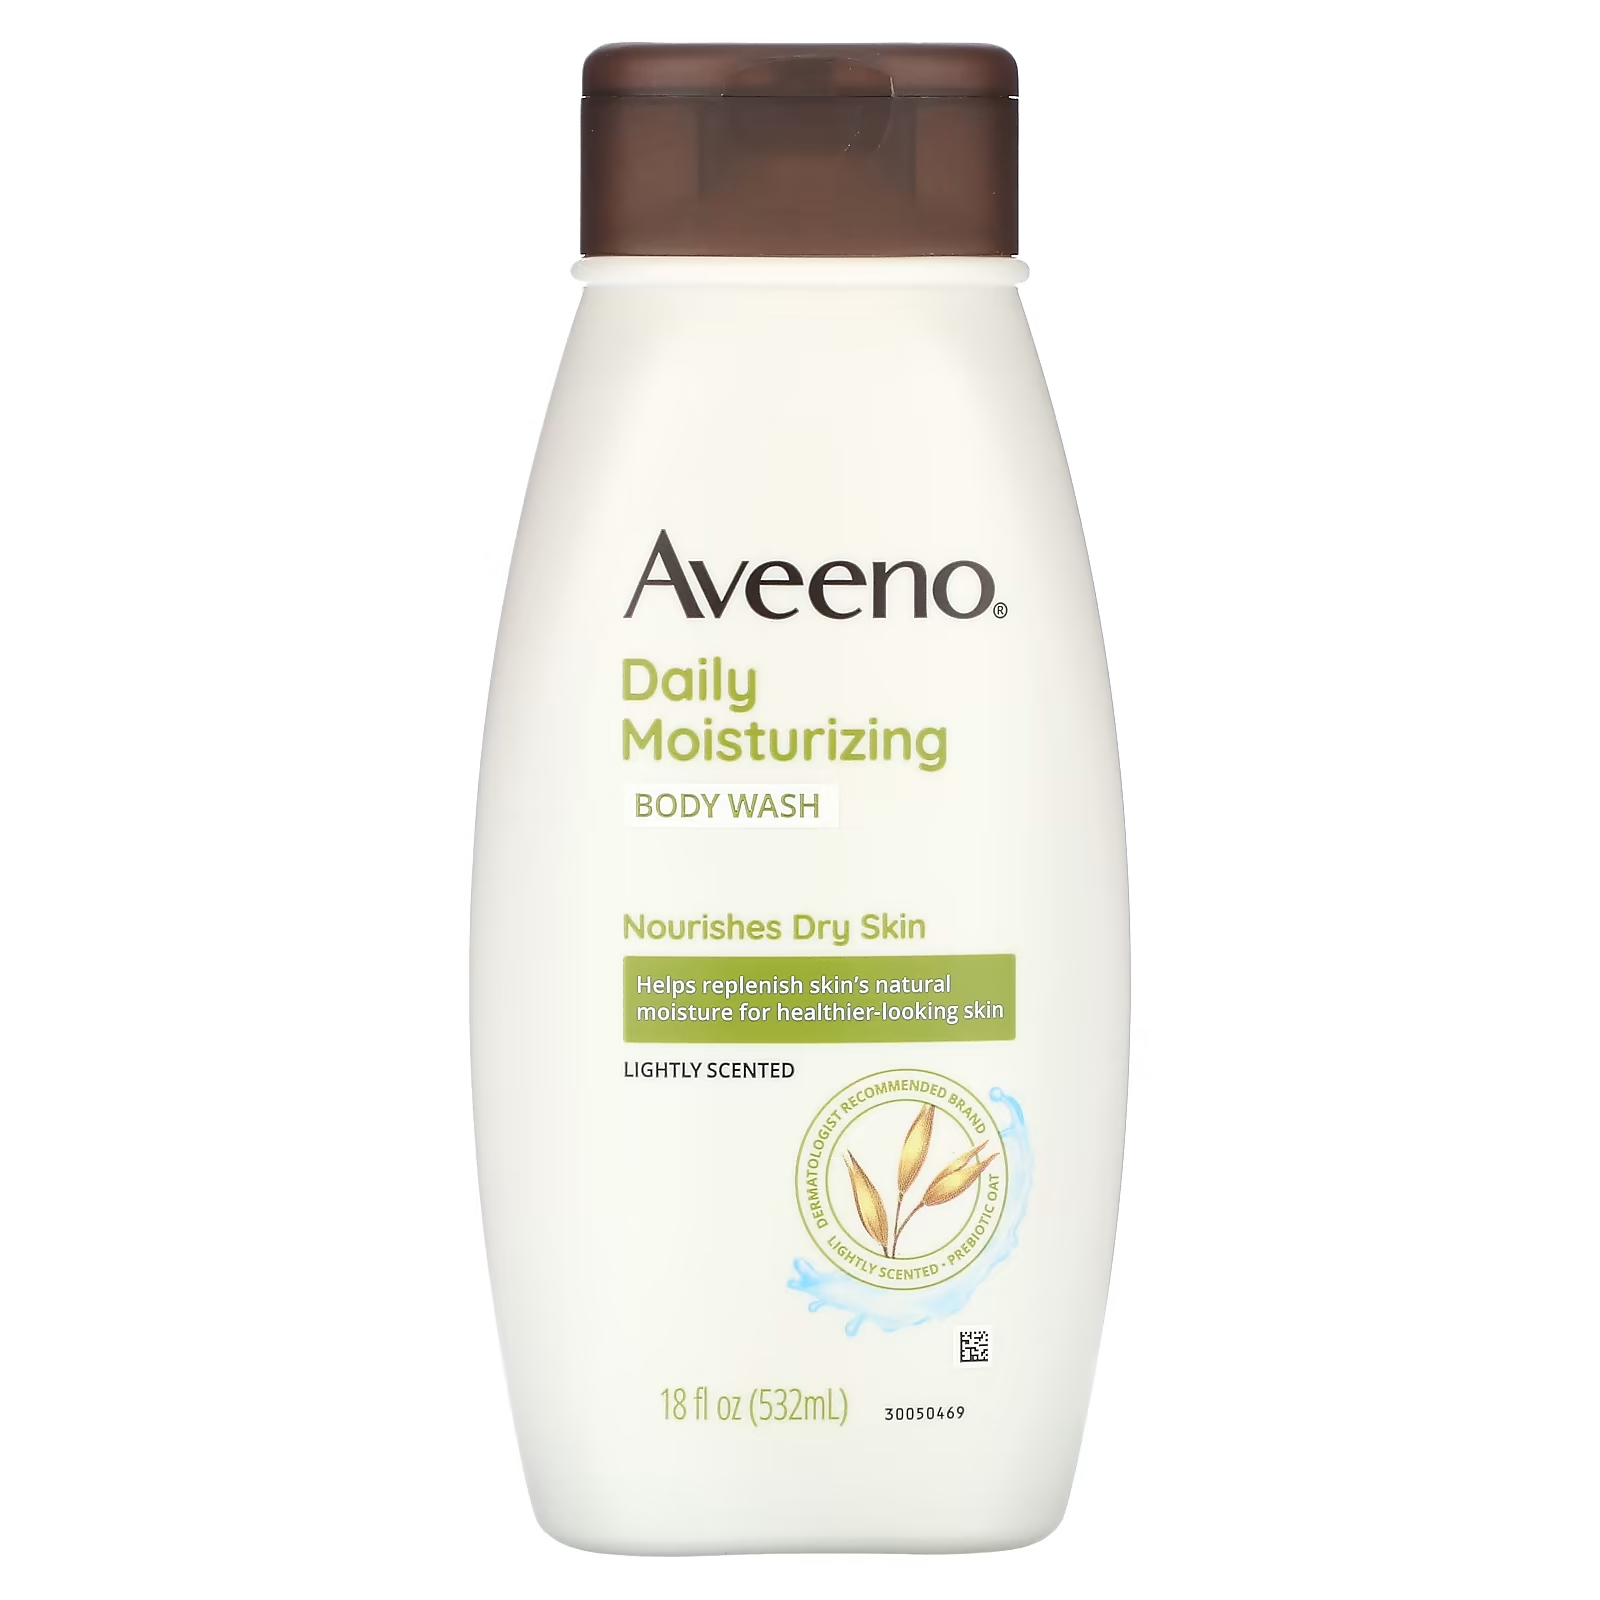 Aveeno Daily Увлажняющий гель для душа с легким ароматом, 18 жидких унций (532 мл) aveeno positively radiant отшелушивающий гель для душа свежесть 532 мл 18 жидк унций